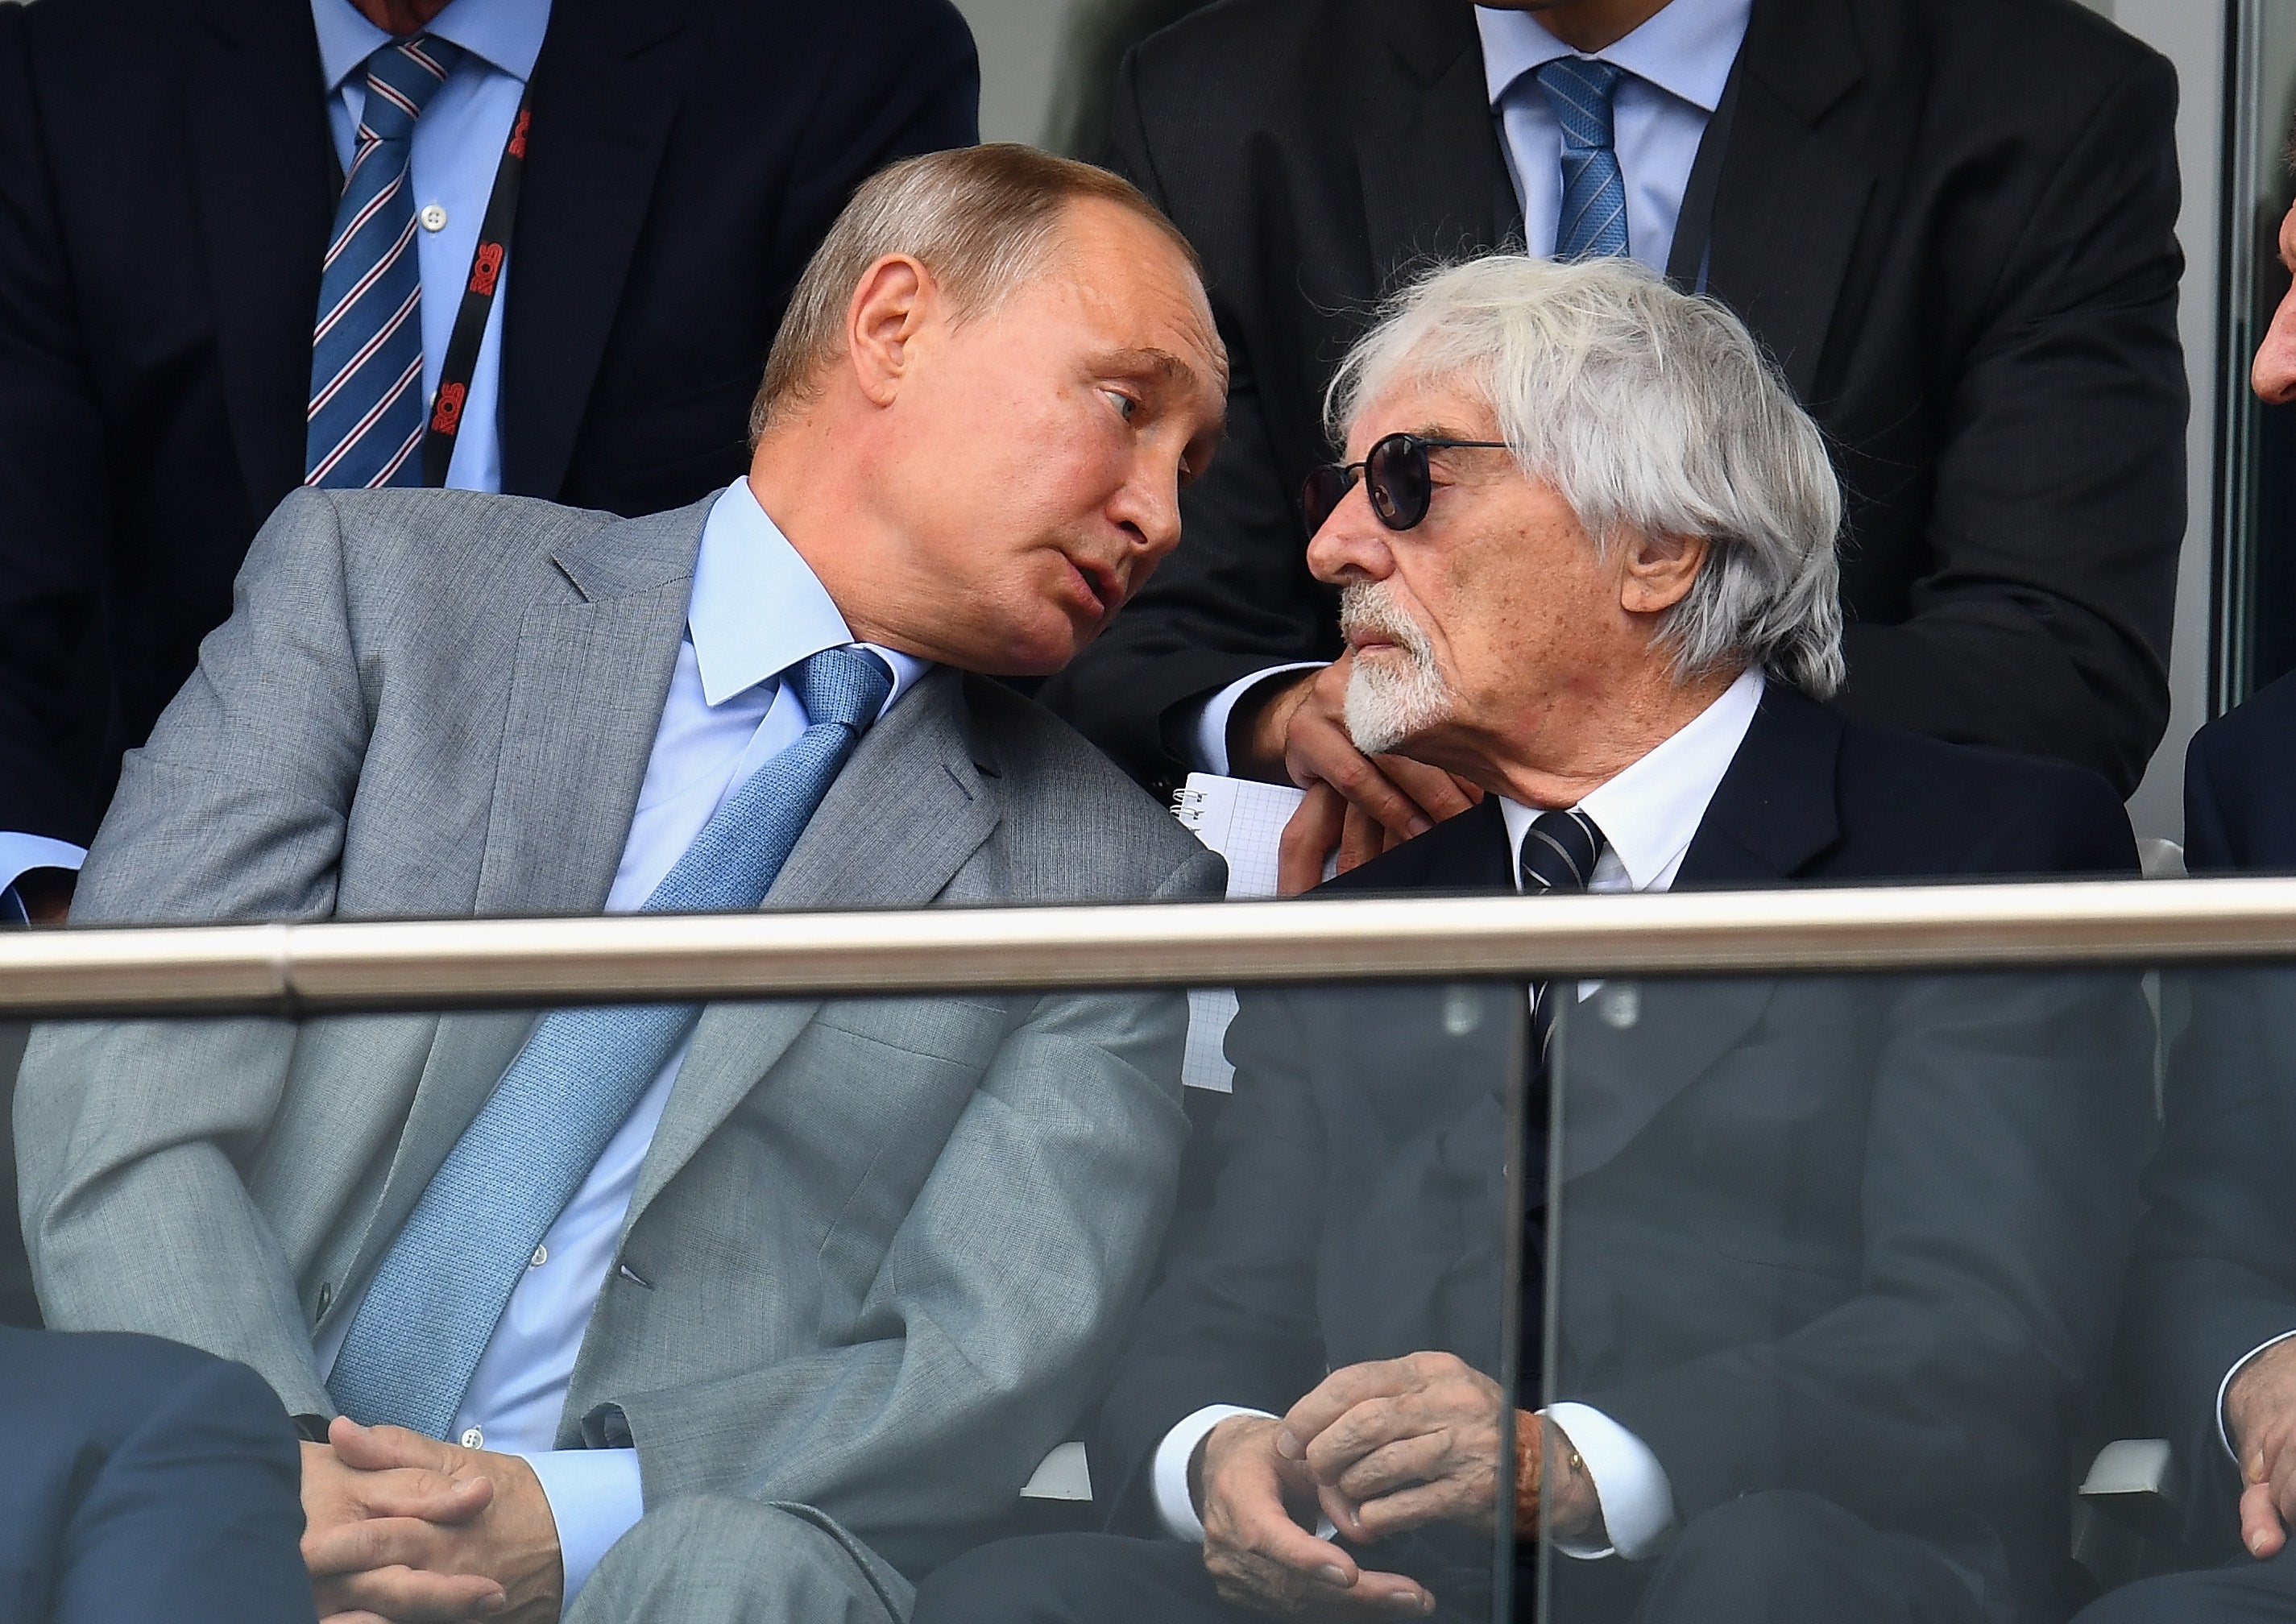 Putin and Ecclestone talk during the Russian Grand Prix in 2018